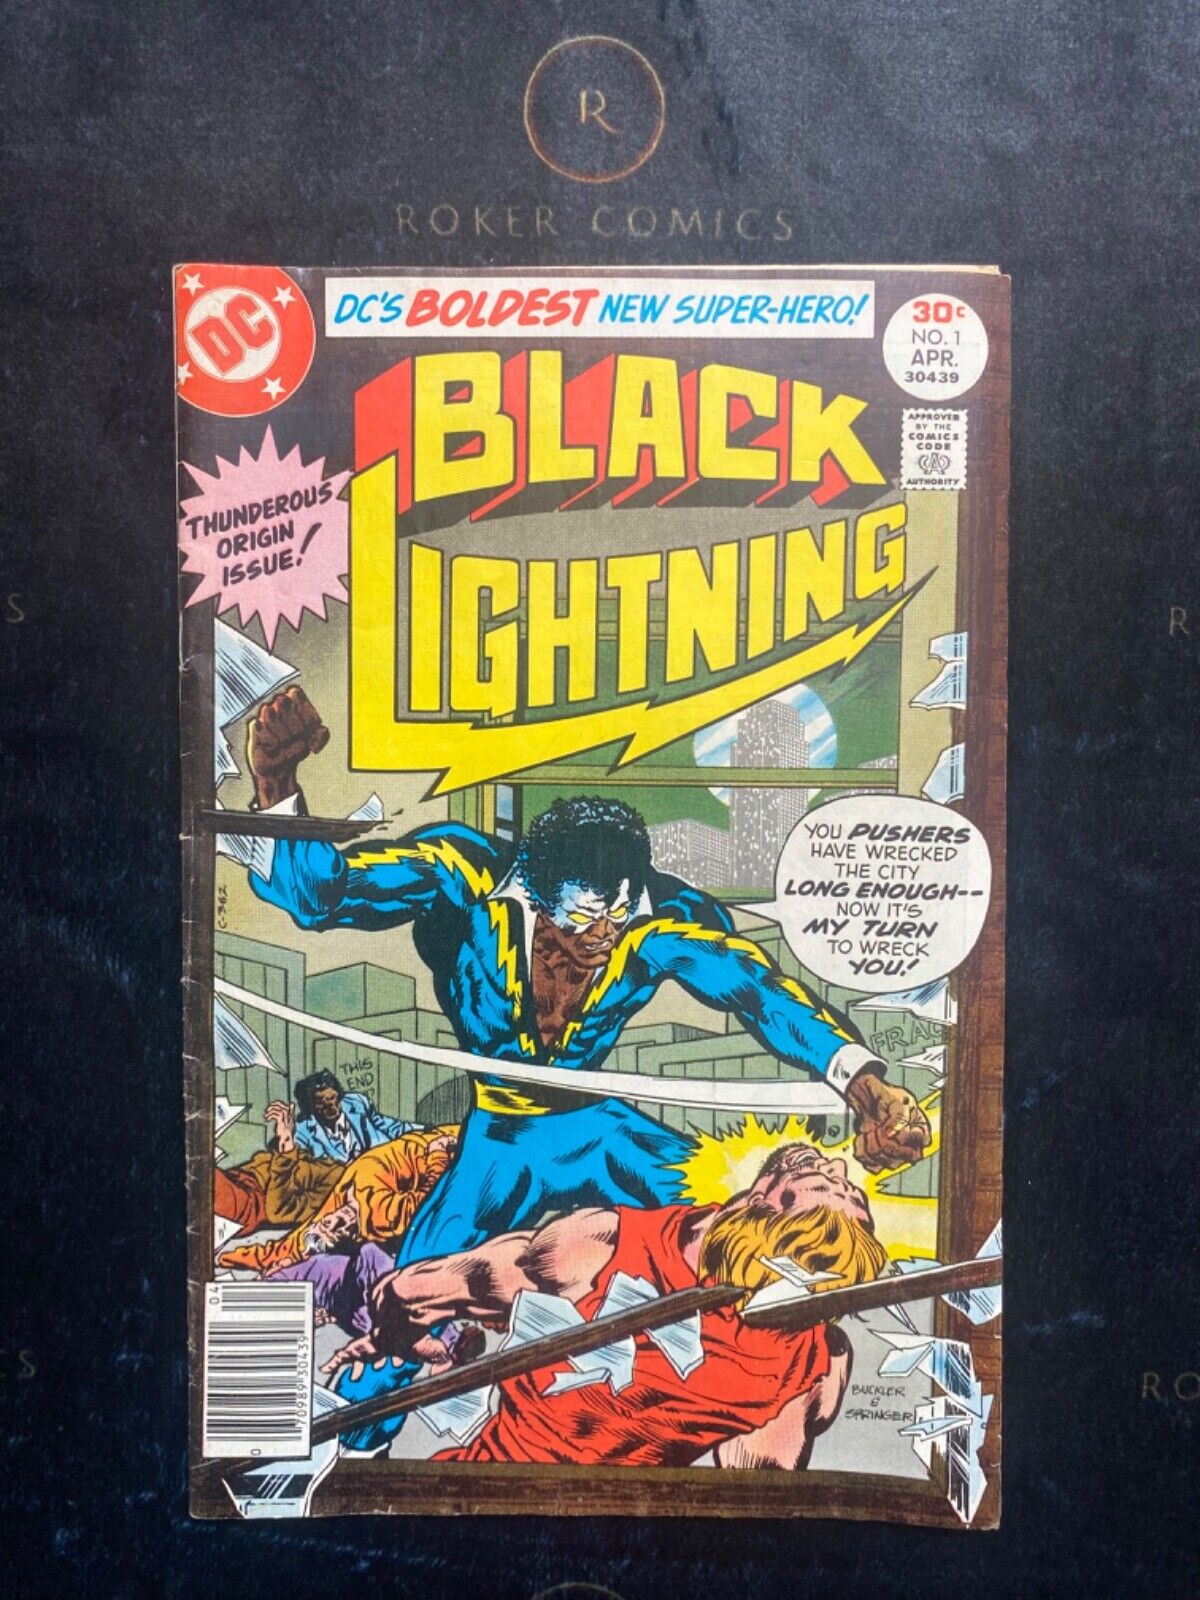 RARE 1977 Black Lightning #1 KEY ISSUE: 1st Appearance of Black Lightning